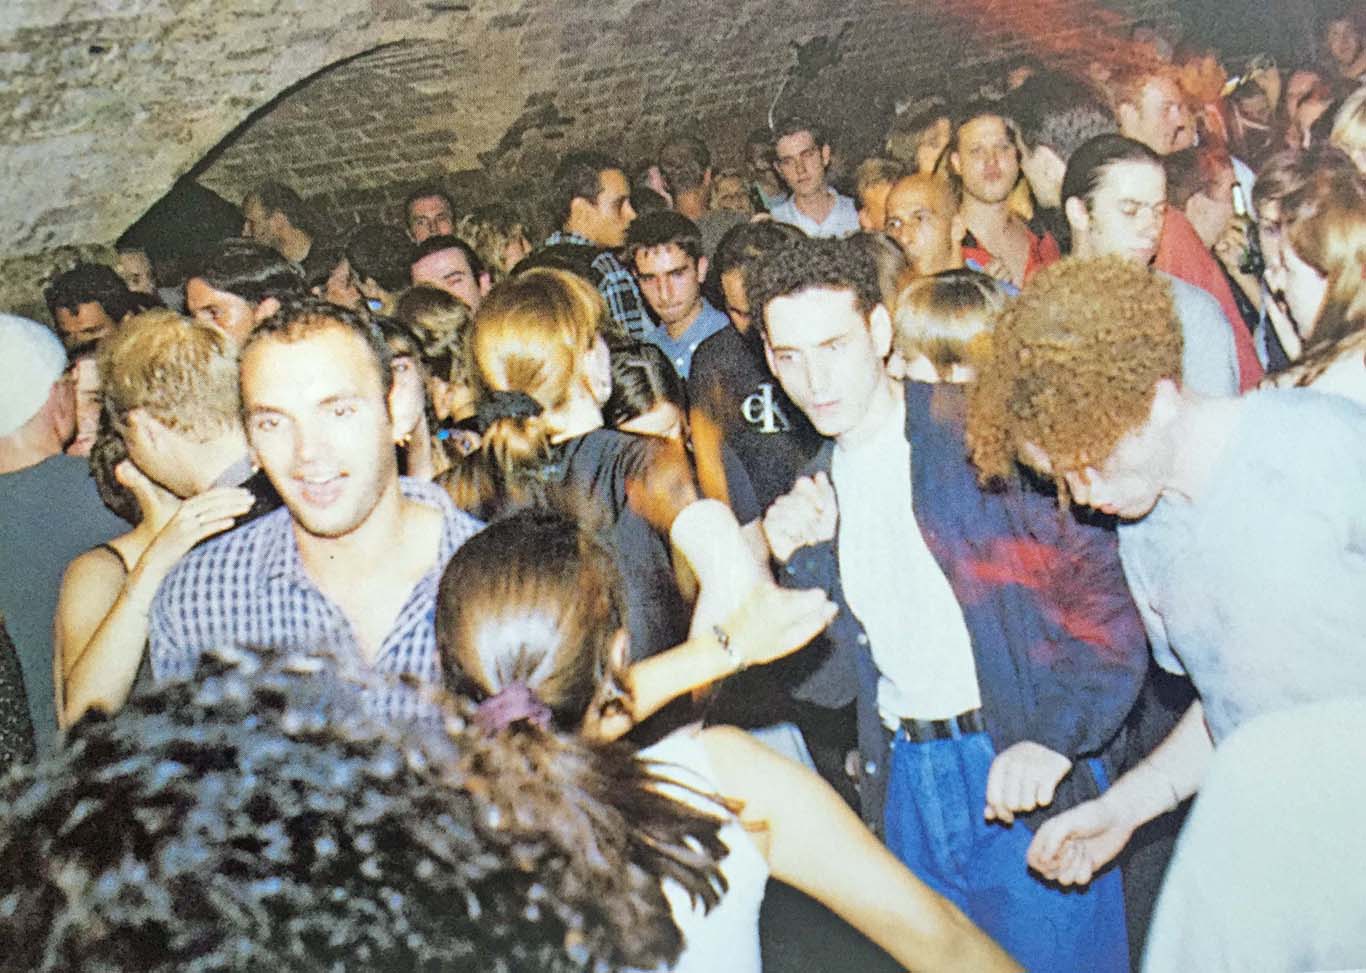 Clubbing in King's Cross in the 90s. Could it return?